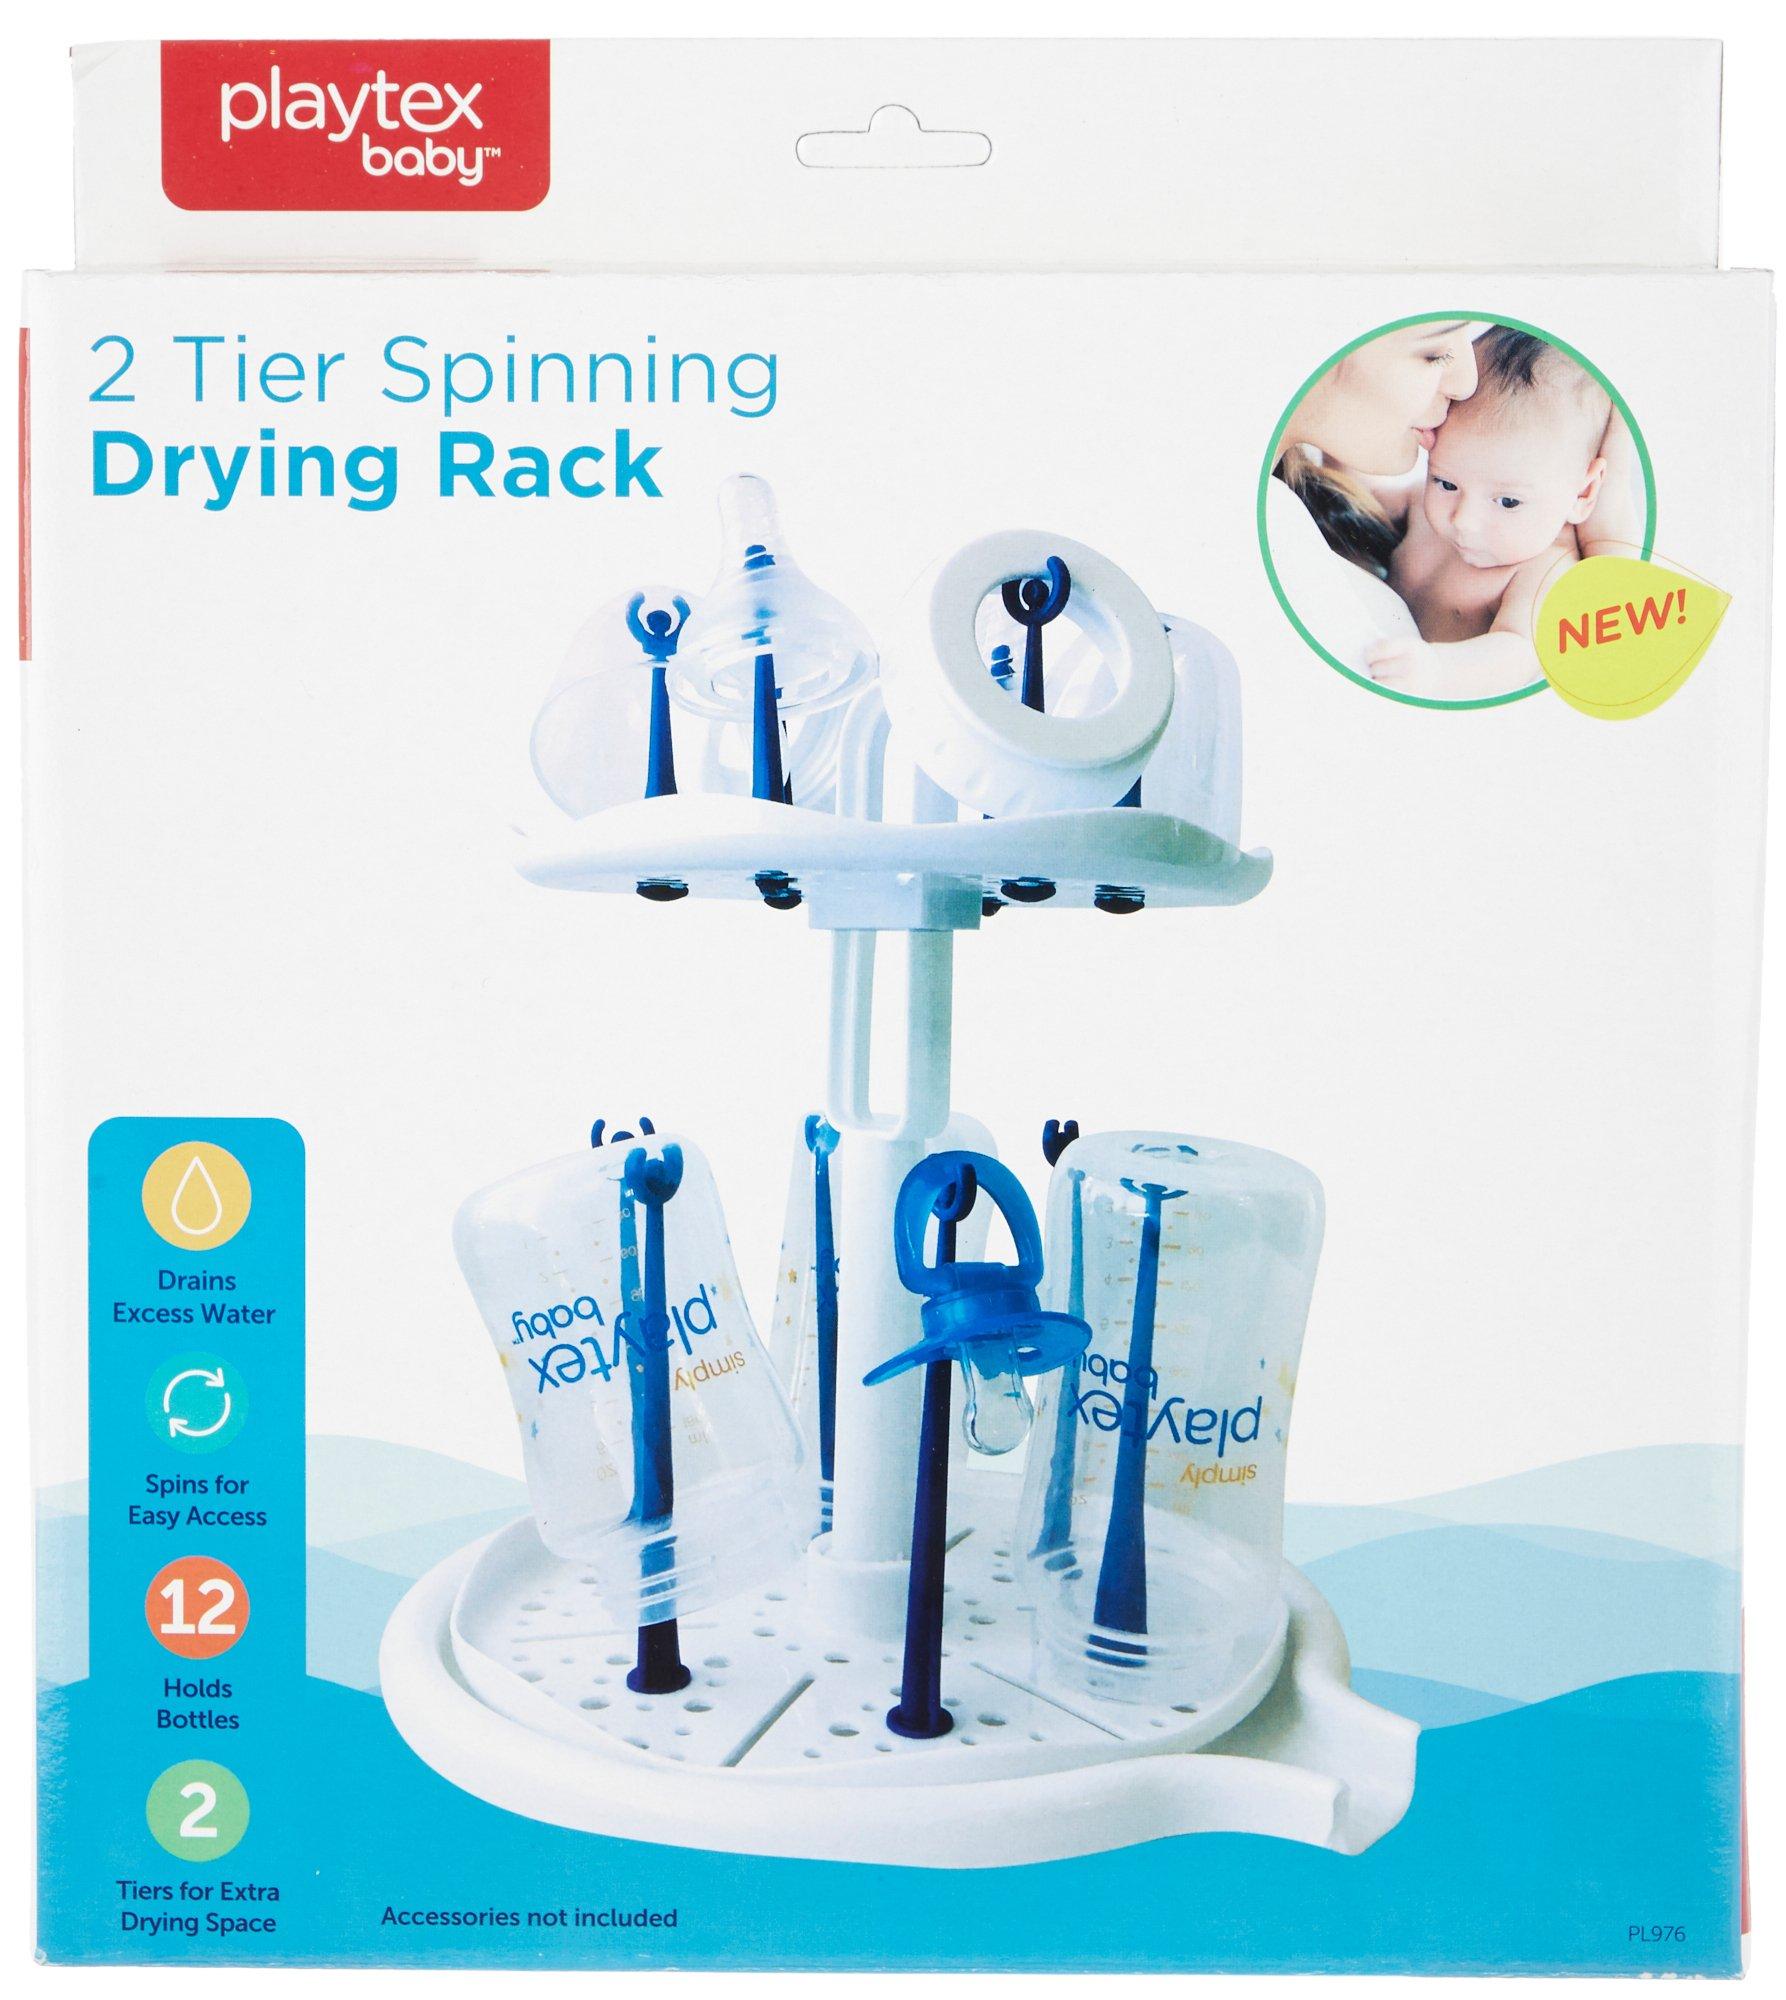 2-Tier Spinning Drying Rack